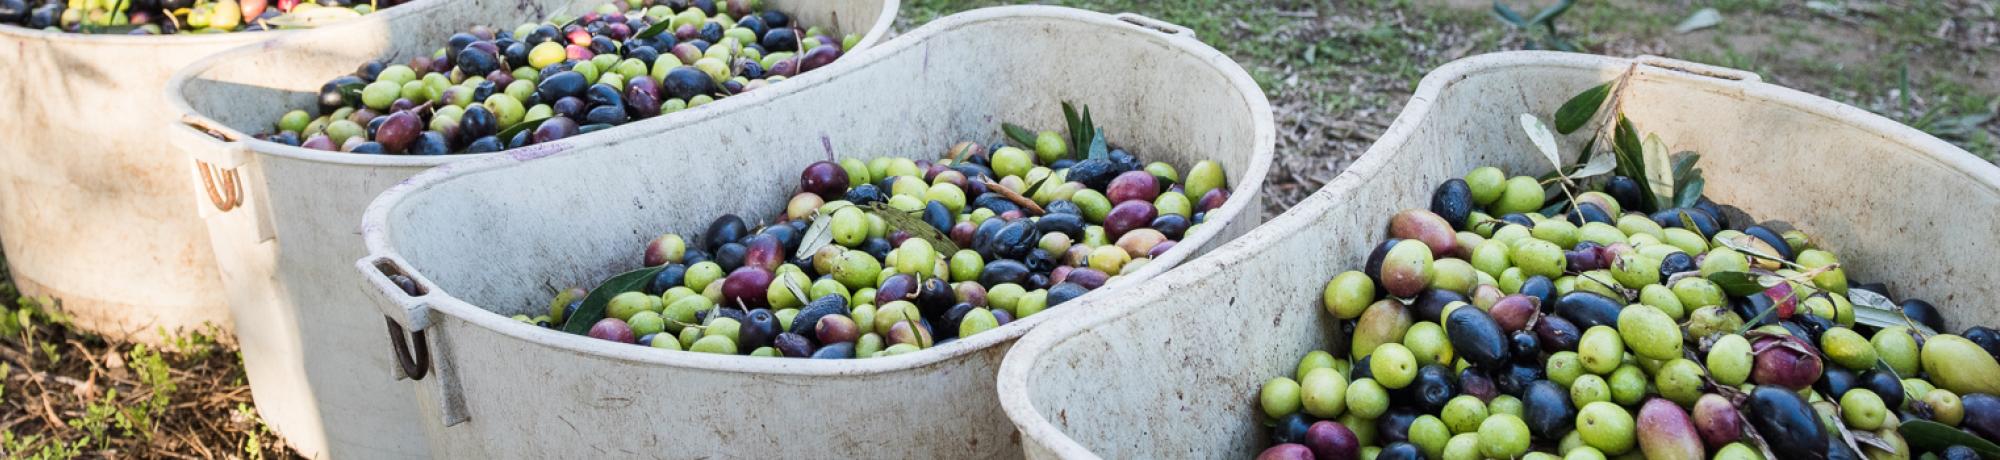 barrels of olive